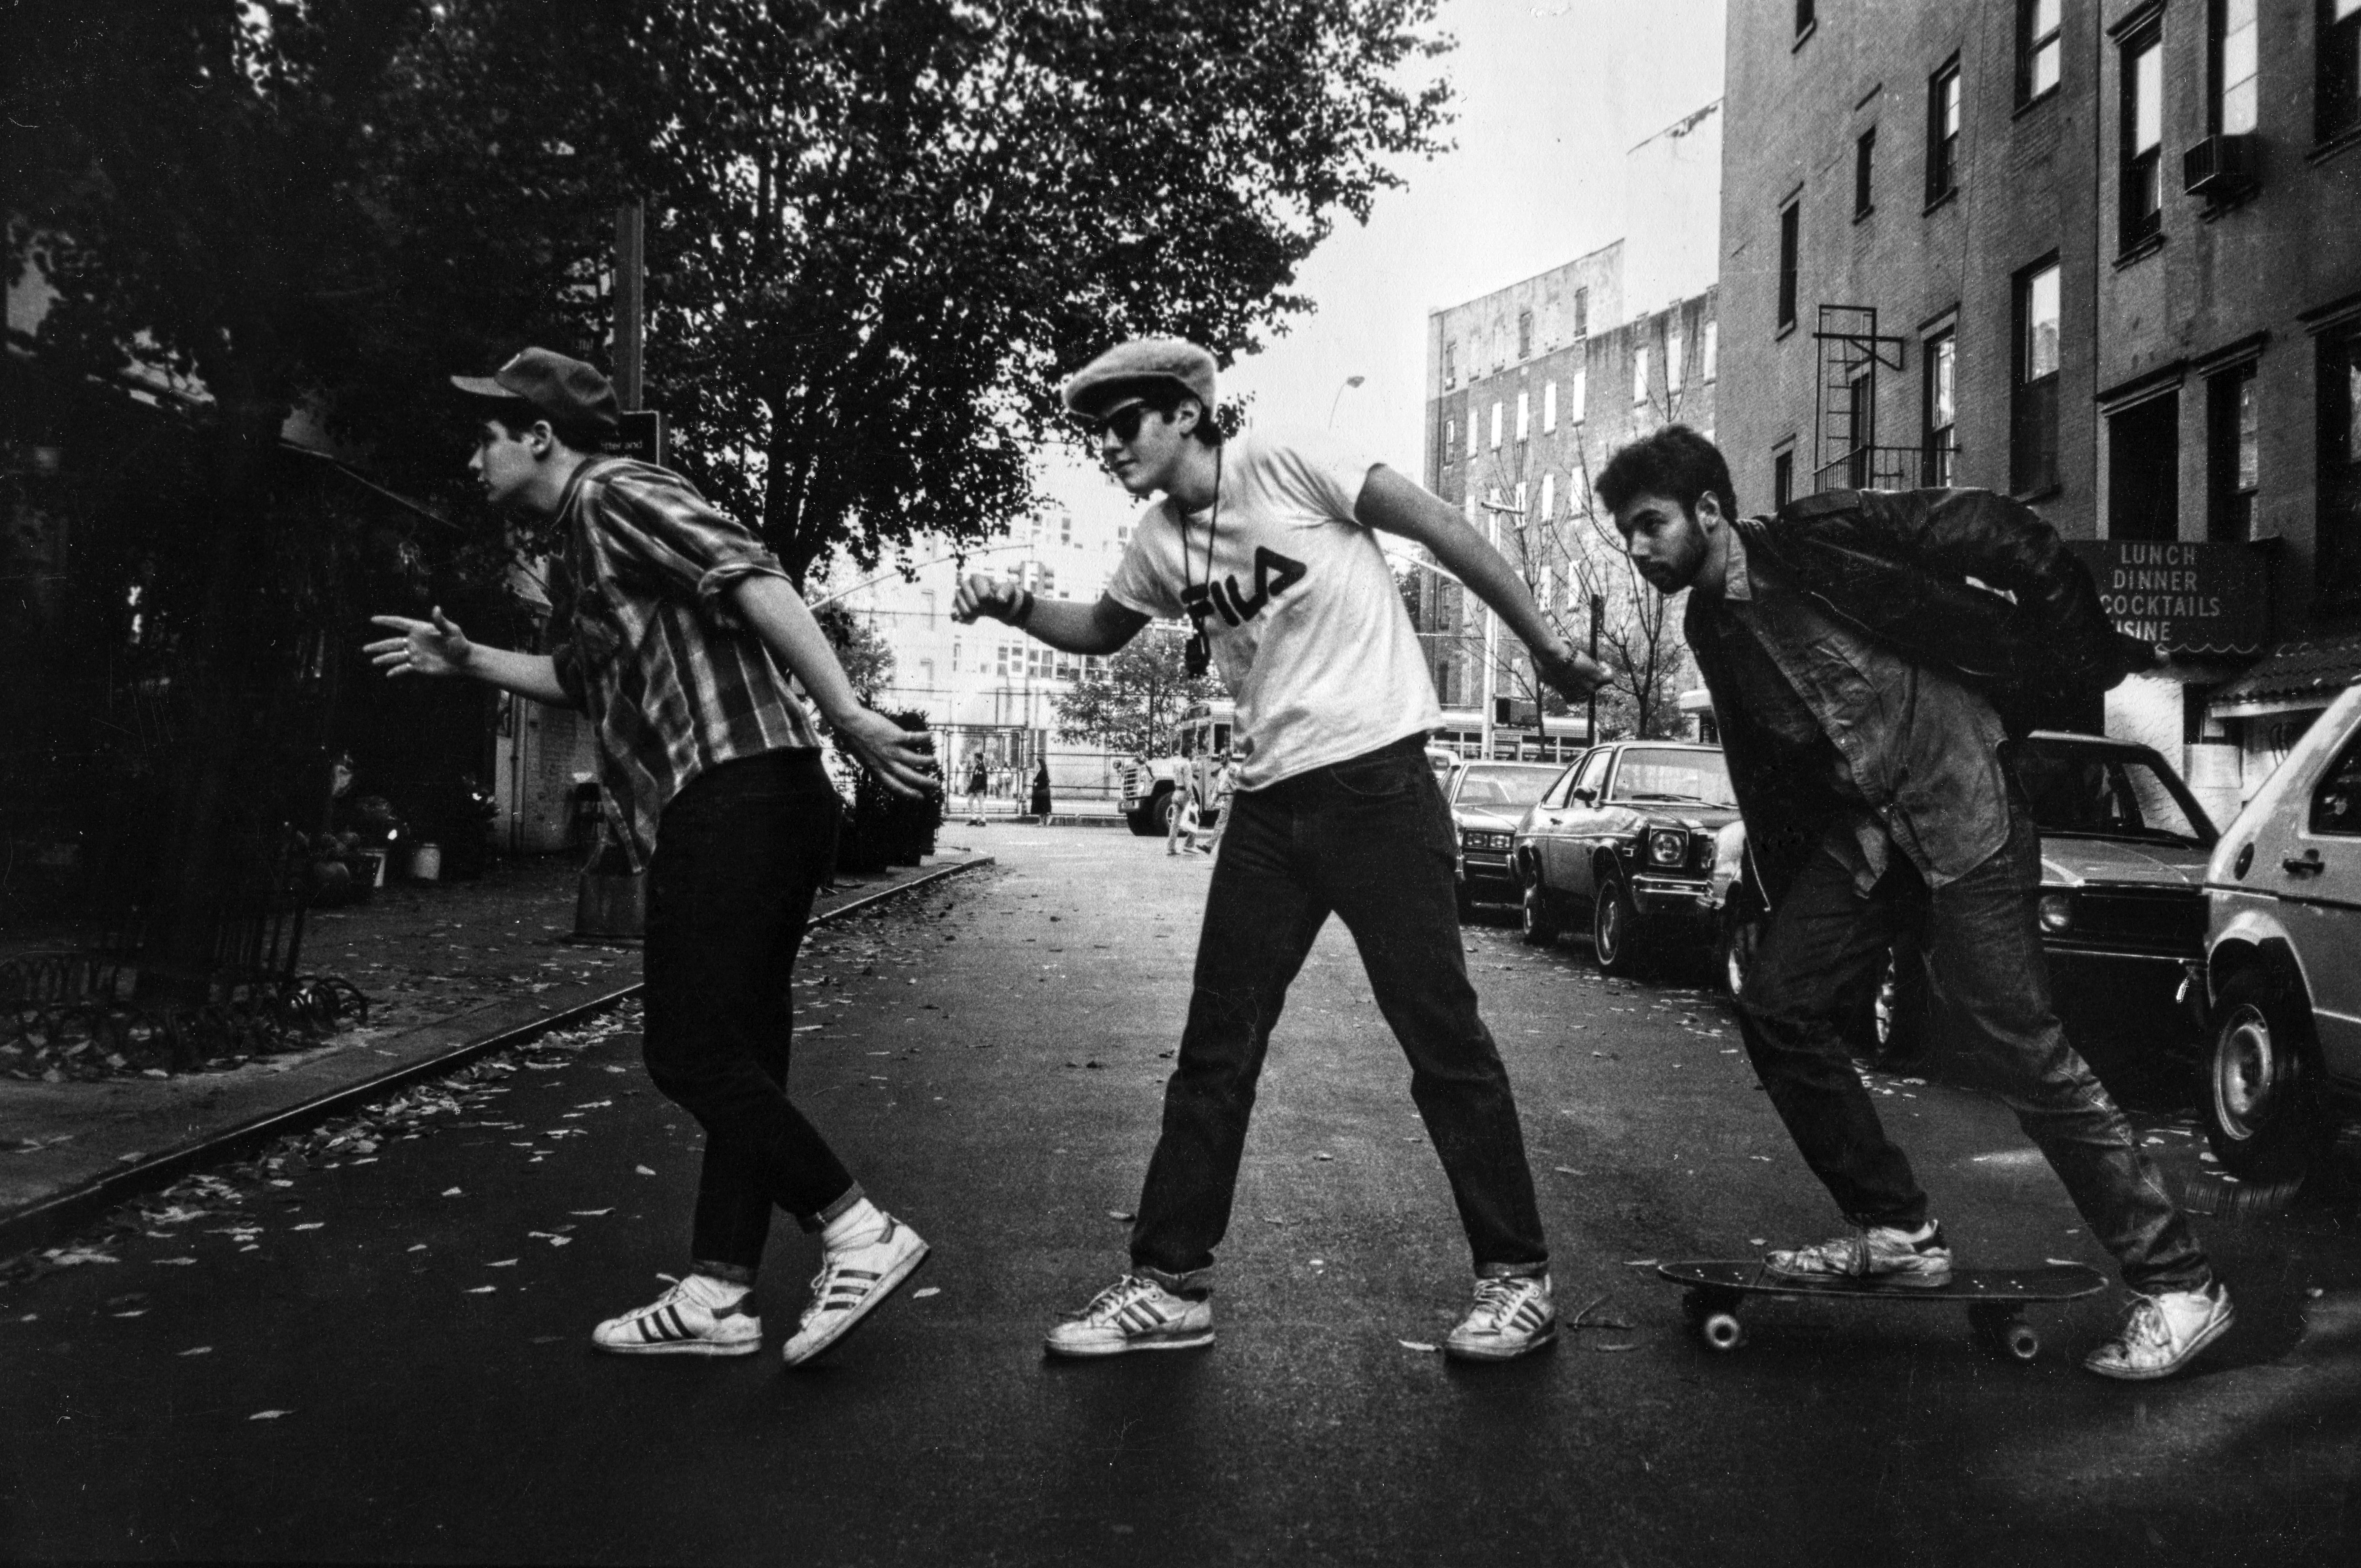 Ricky Powell Black and White Photograph - Charles Street Shuffle (Beastie Boys)